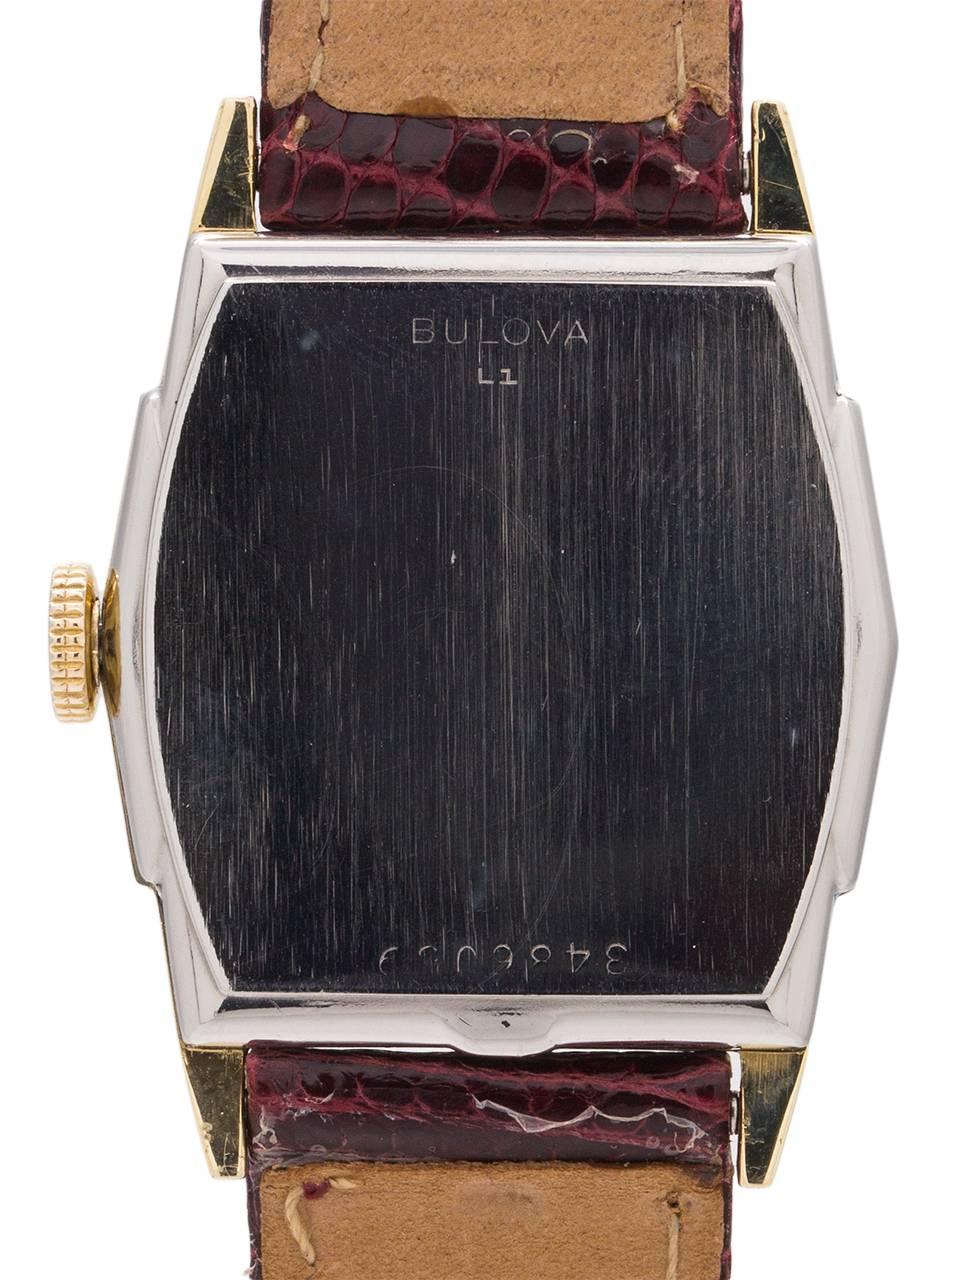 Retro Bulova Yellow Gold Filled Manual Wind Dress Wristwatch, circa 1951